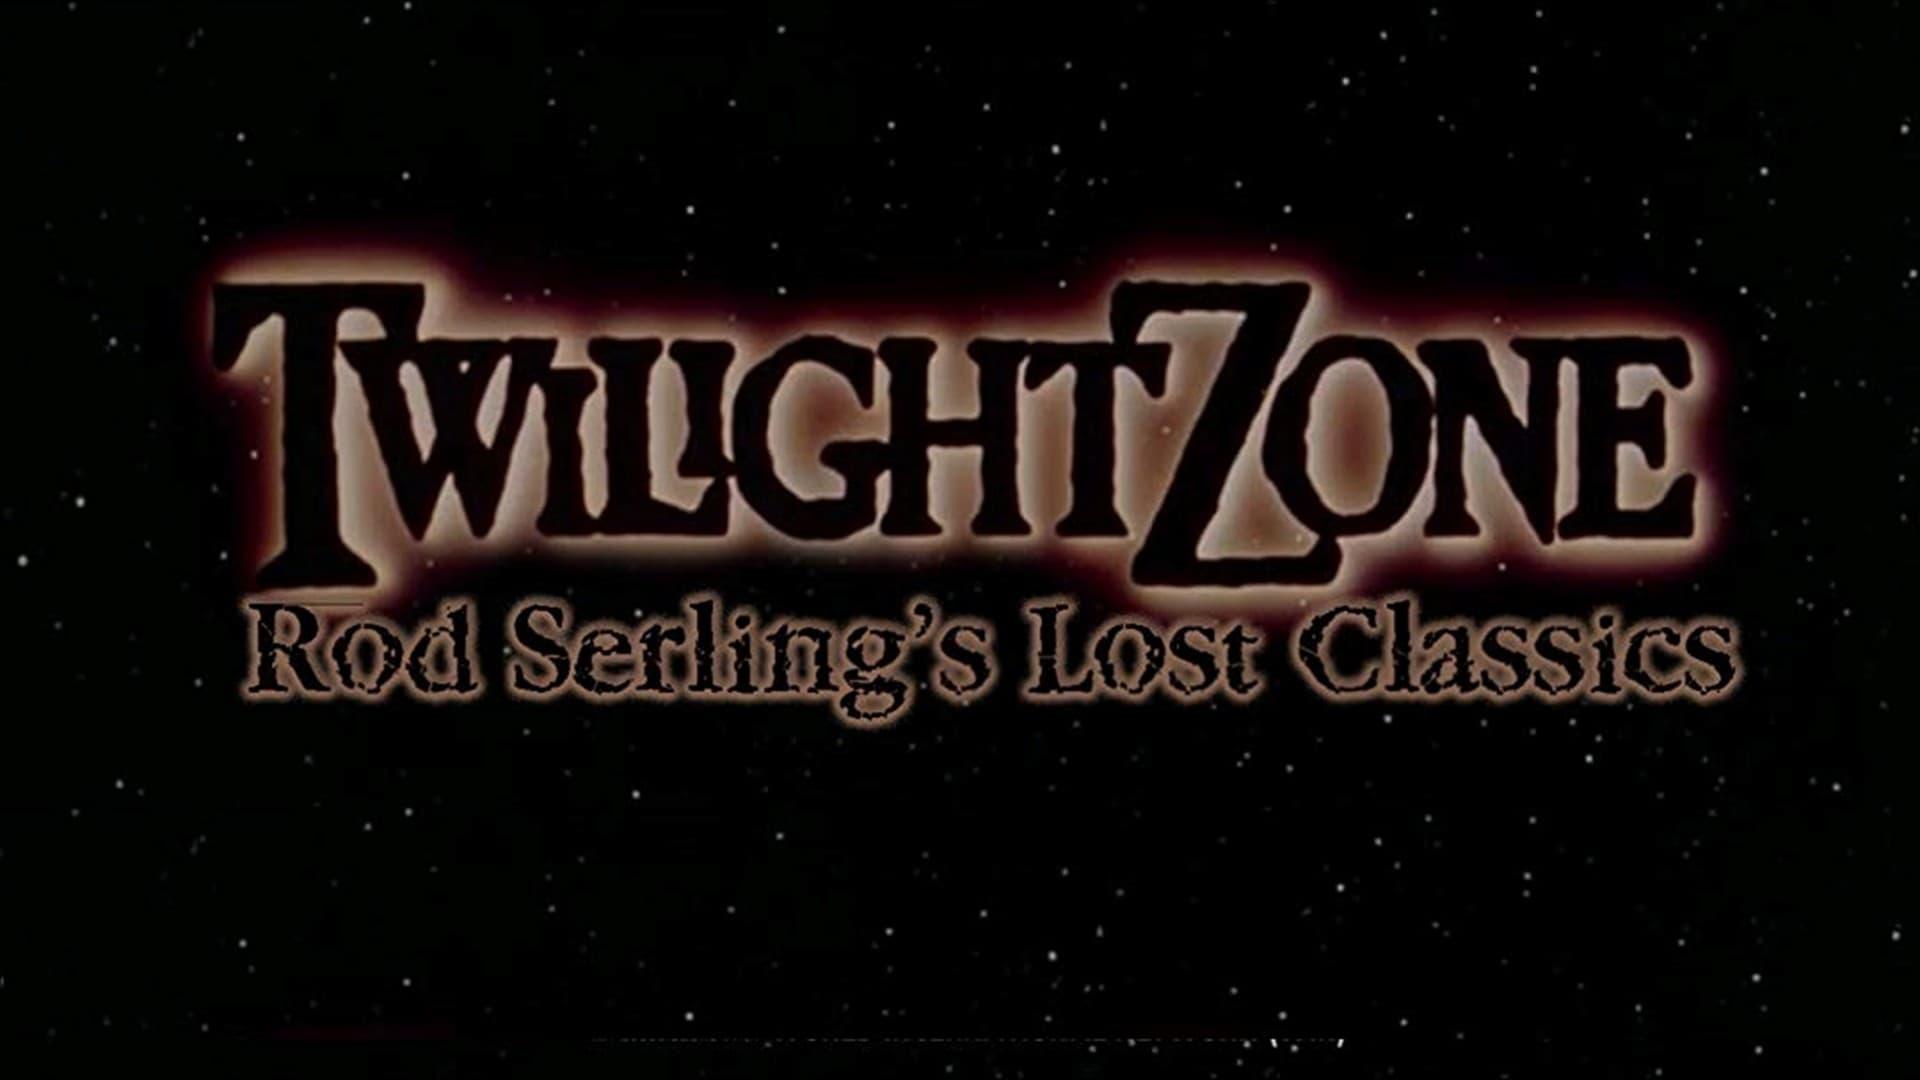 Twilight Zone: Rod Serling's Lost Classics backdrop